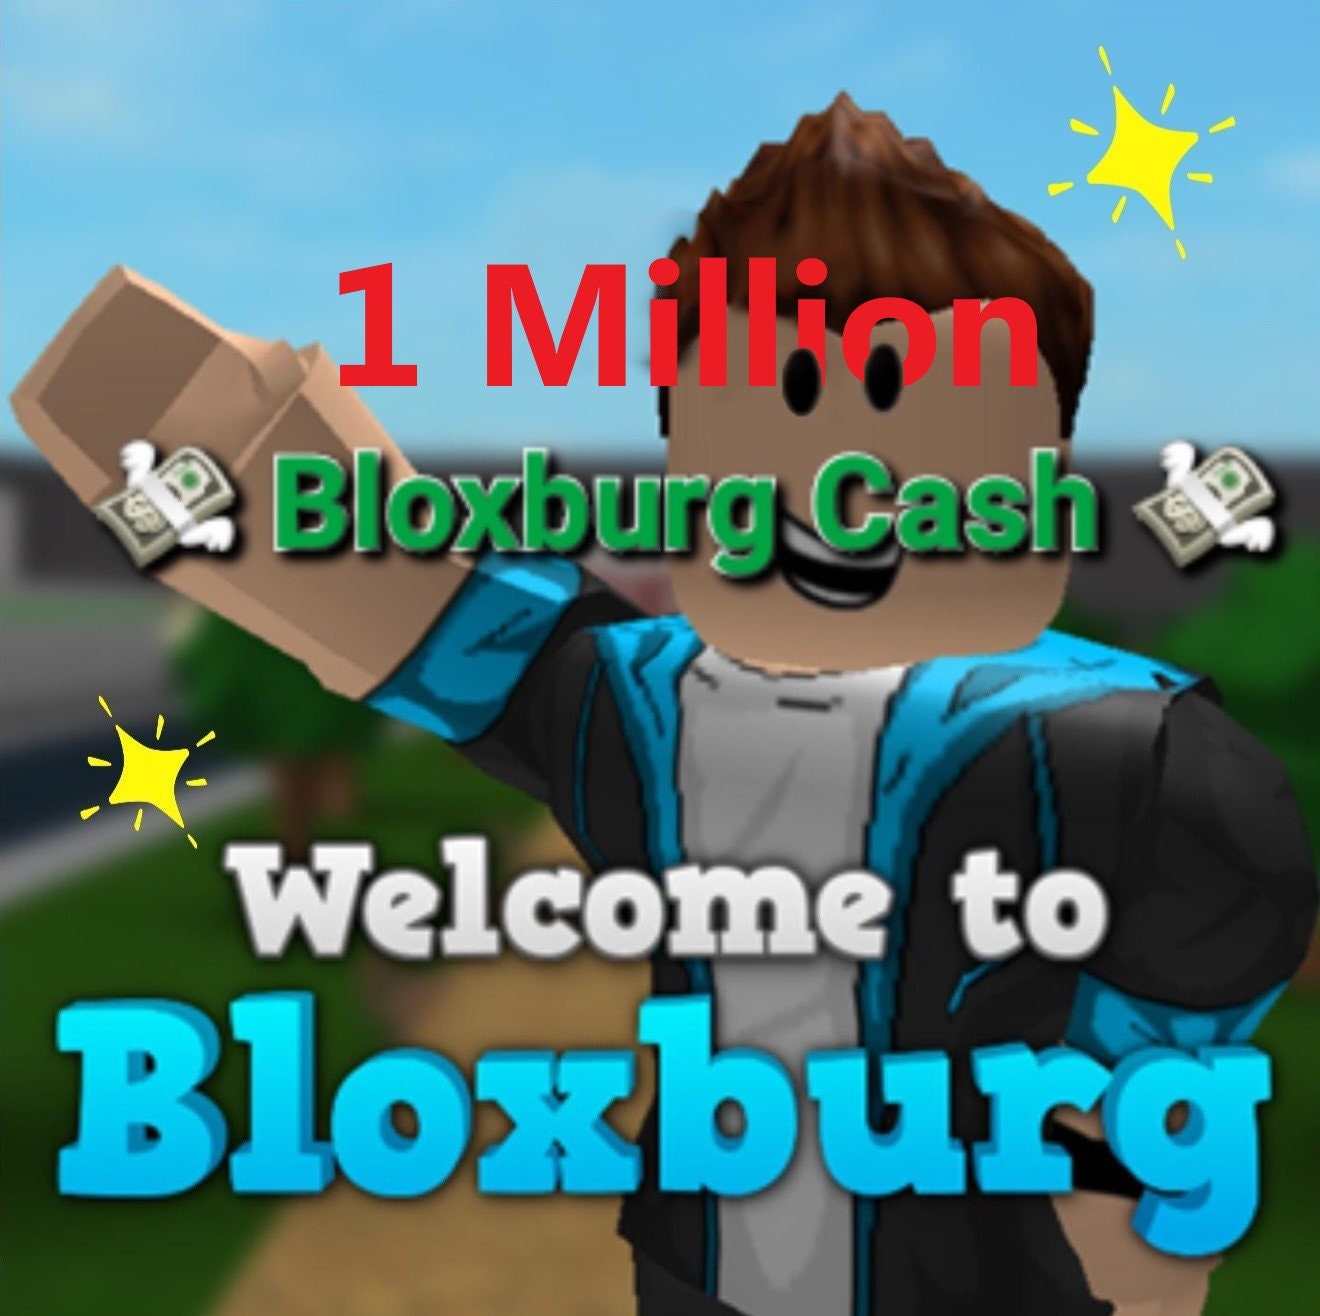 BLOXBURG WAS BOUGHT FOR $100 MILLION DOLLARS 